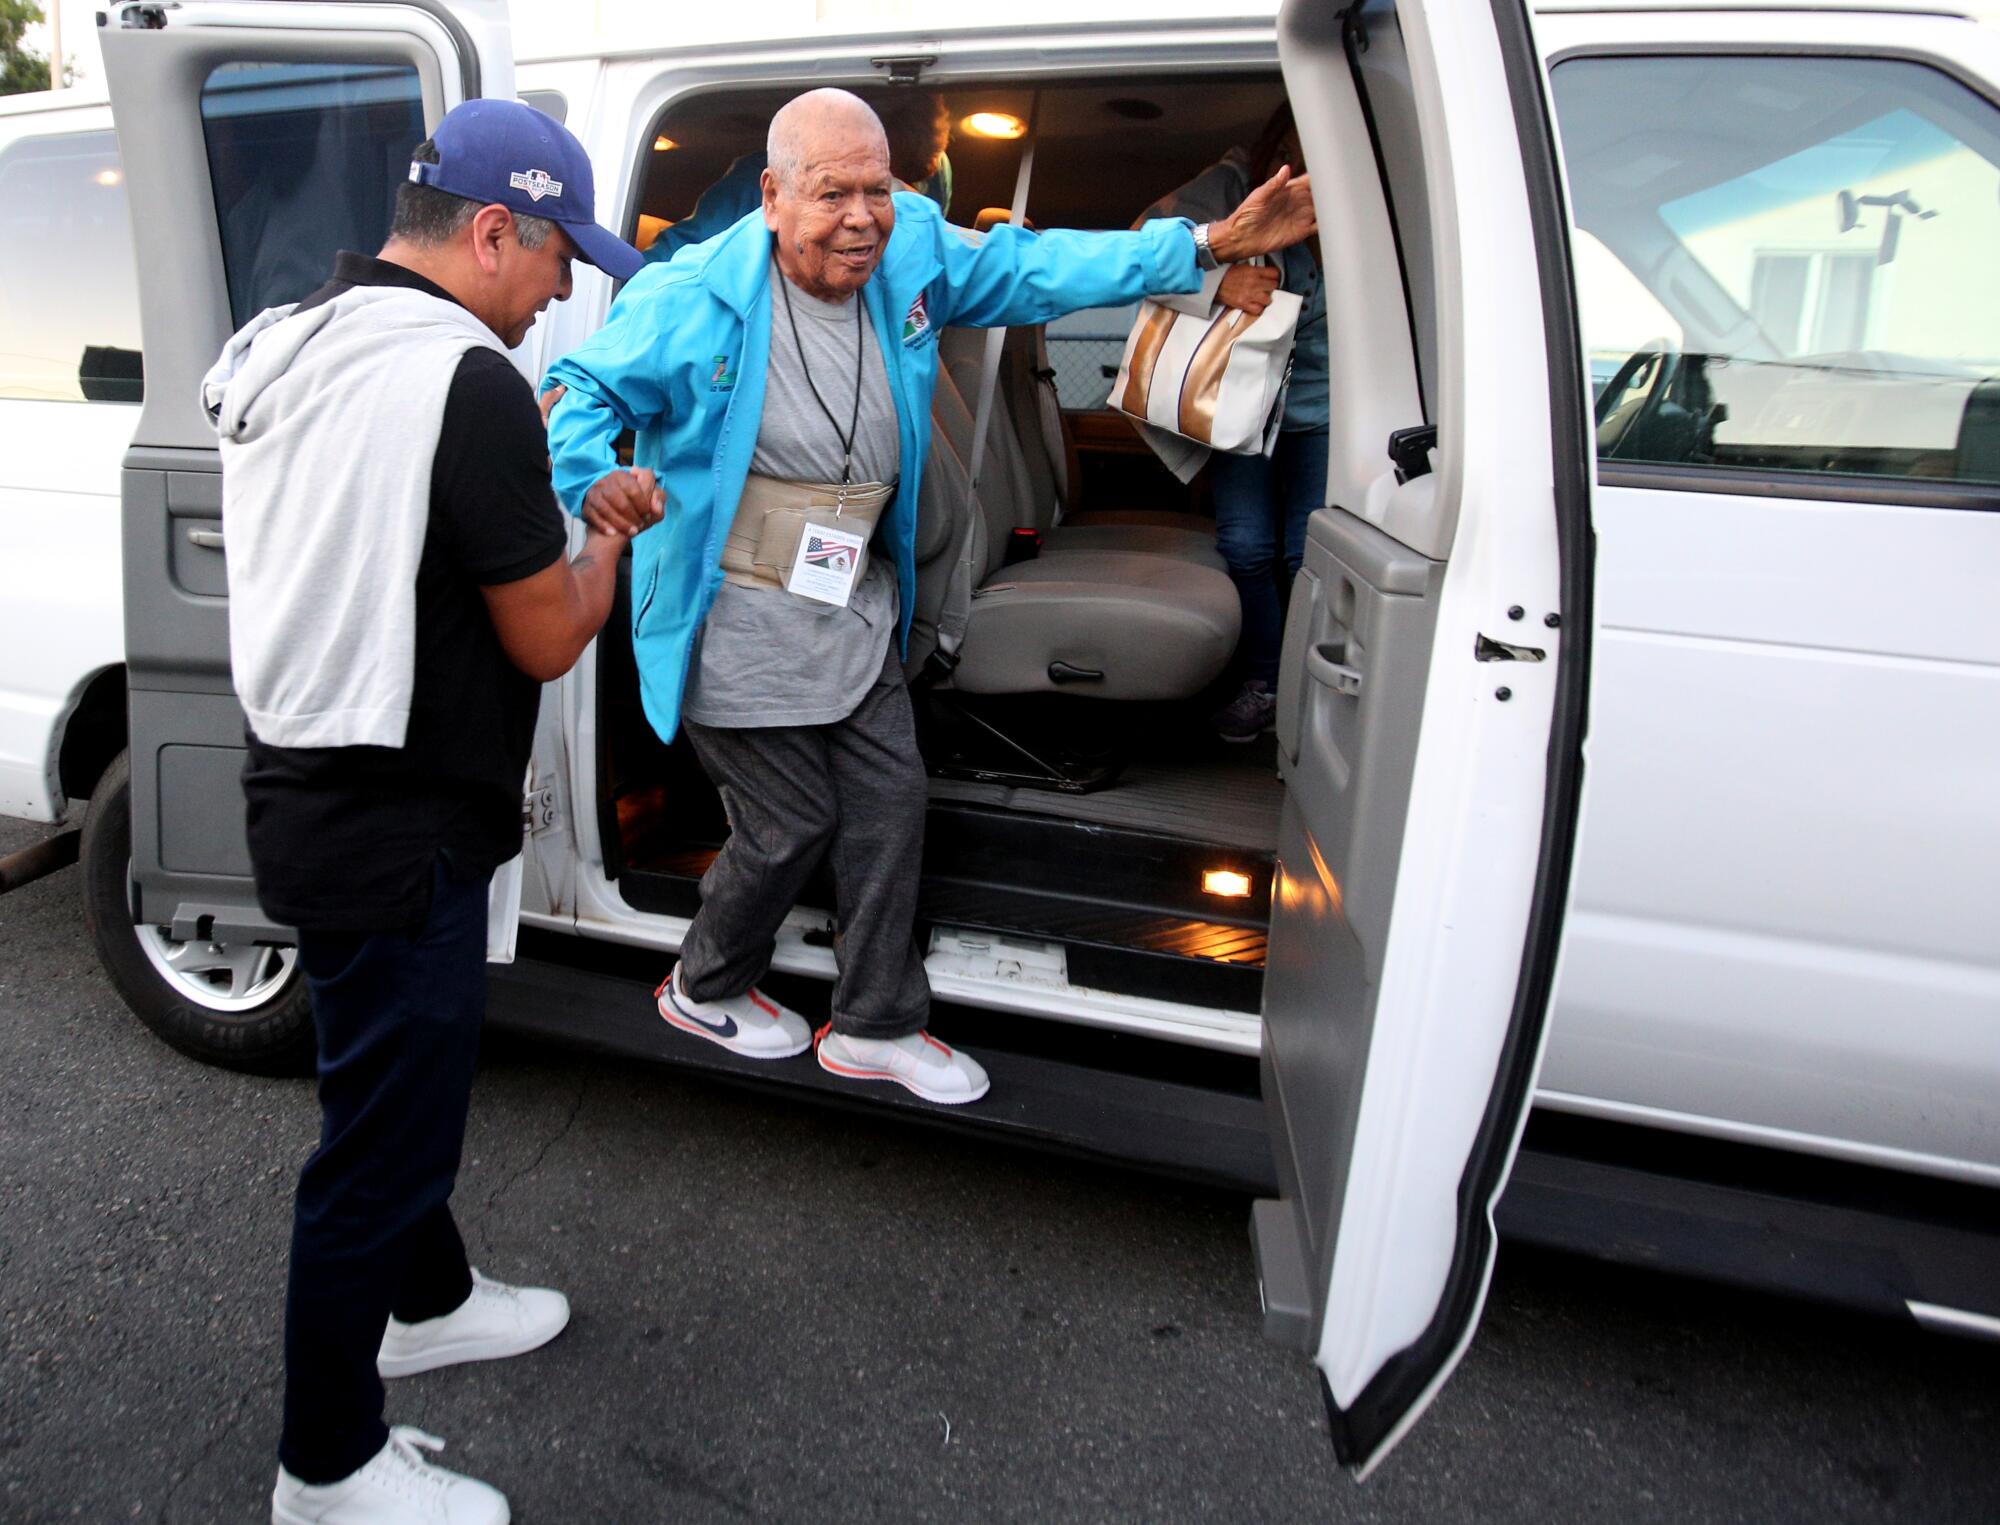 Ninety-year-old Ignacio Mendoza steps out of a white van